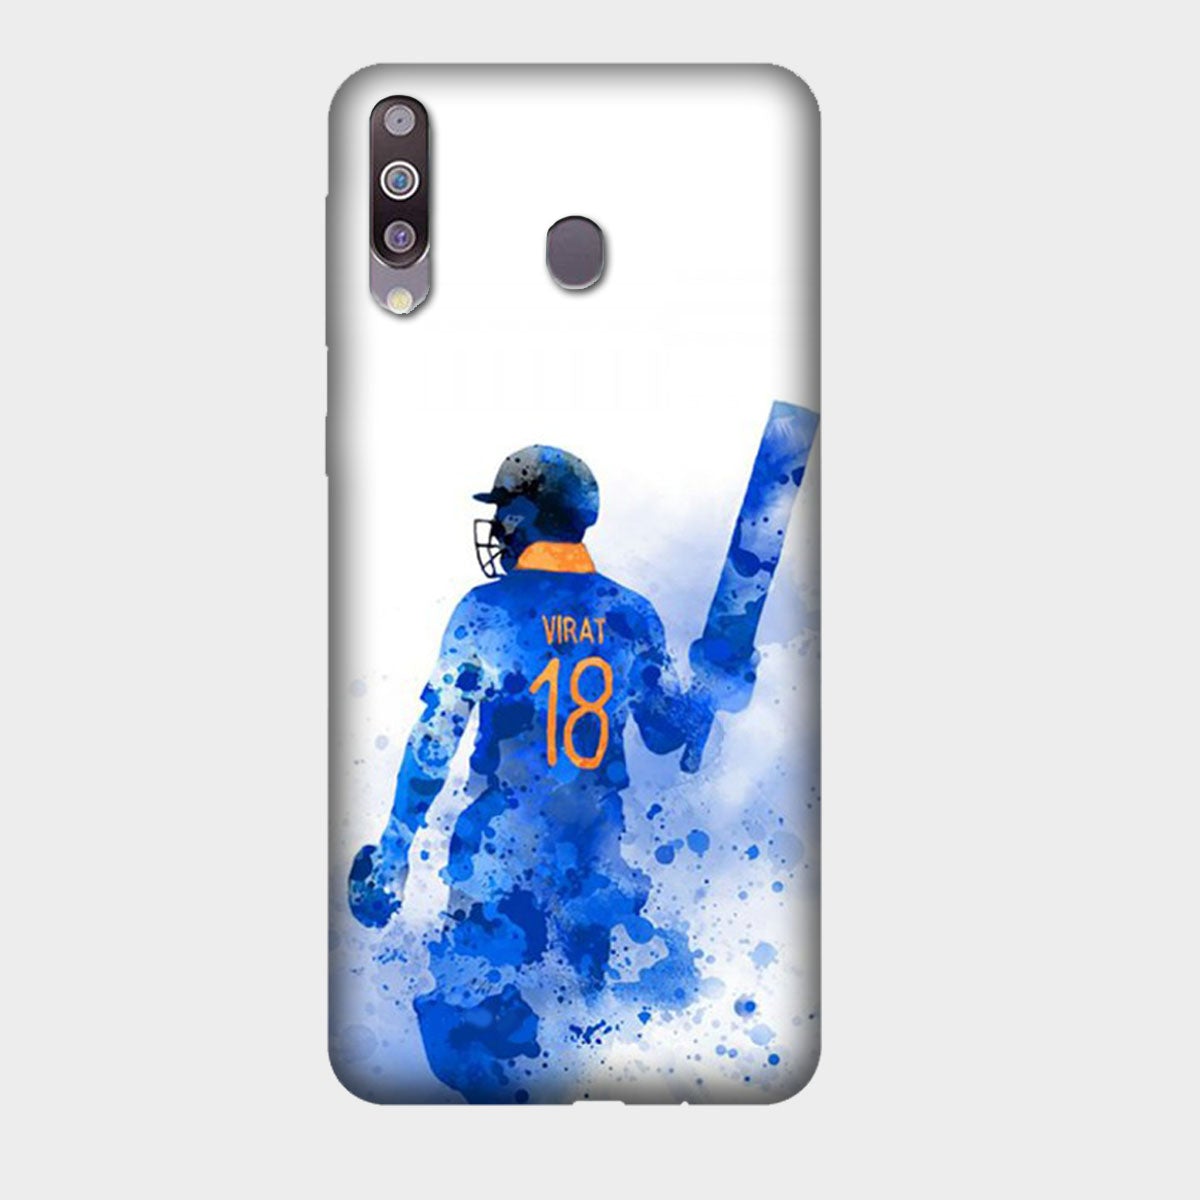 Virat Kohli - Team India - Mobile Phone Cover - Hard Case - Samsung - Samsung